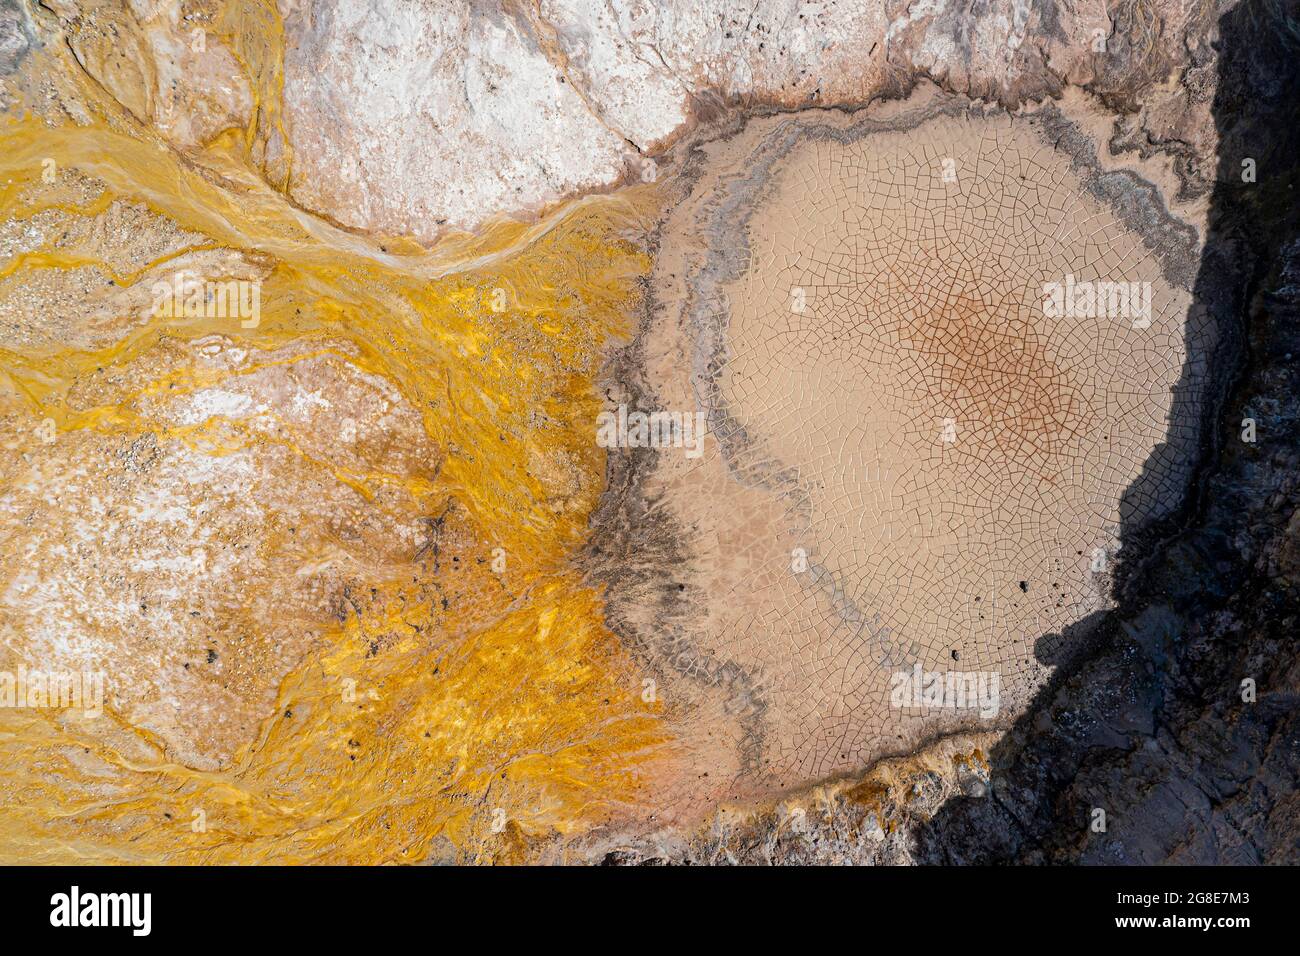 Aerial view, yellow-coloured sulphur stones, Polyvotis crater, volcano on Nisyros, Dodecanese, Greece Stock Photo